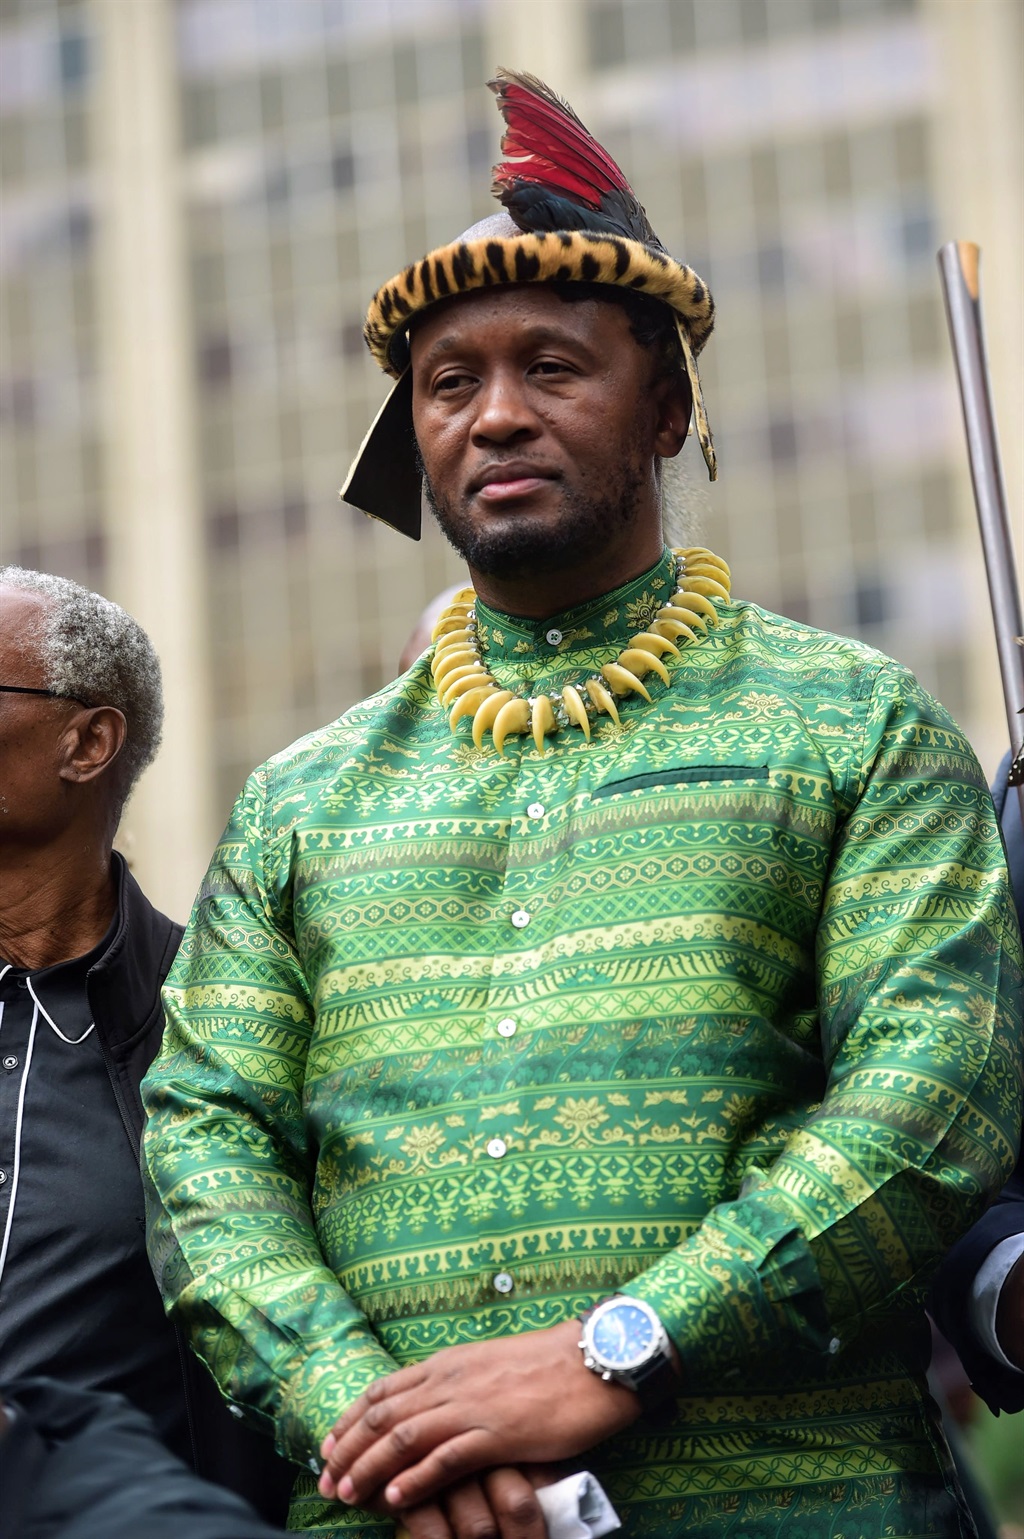 Prince Simphiwe Zulu with a green regalia outside 